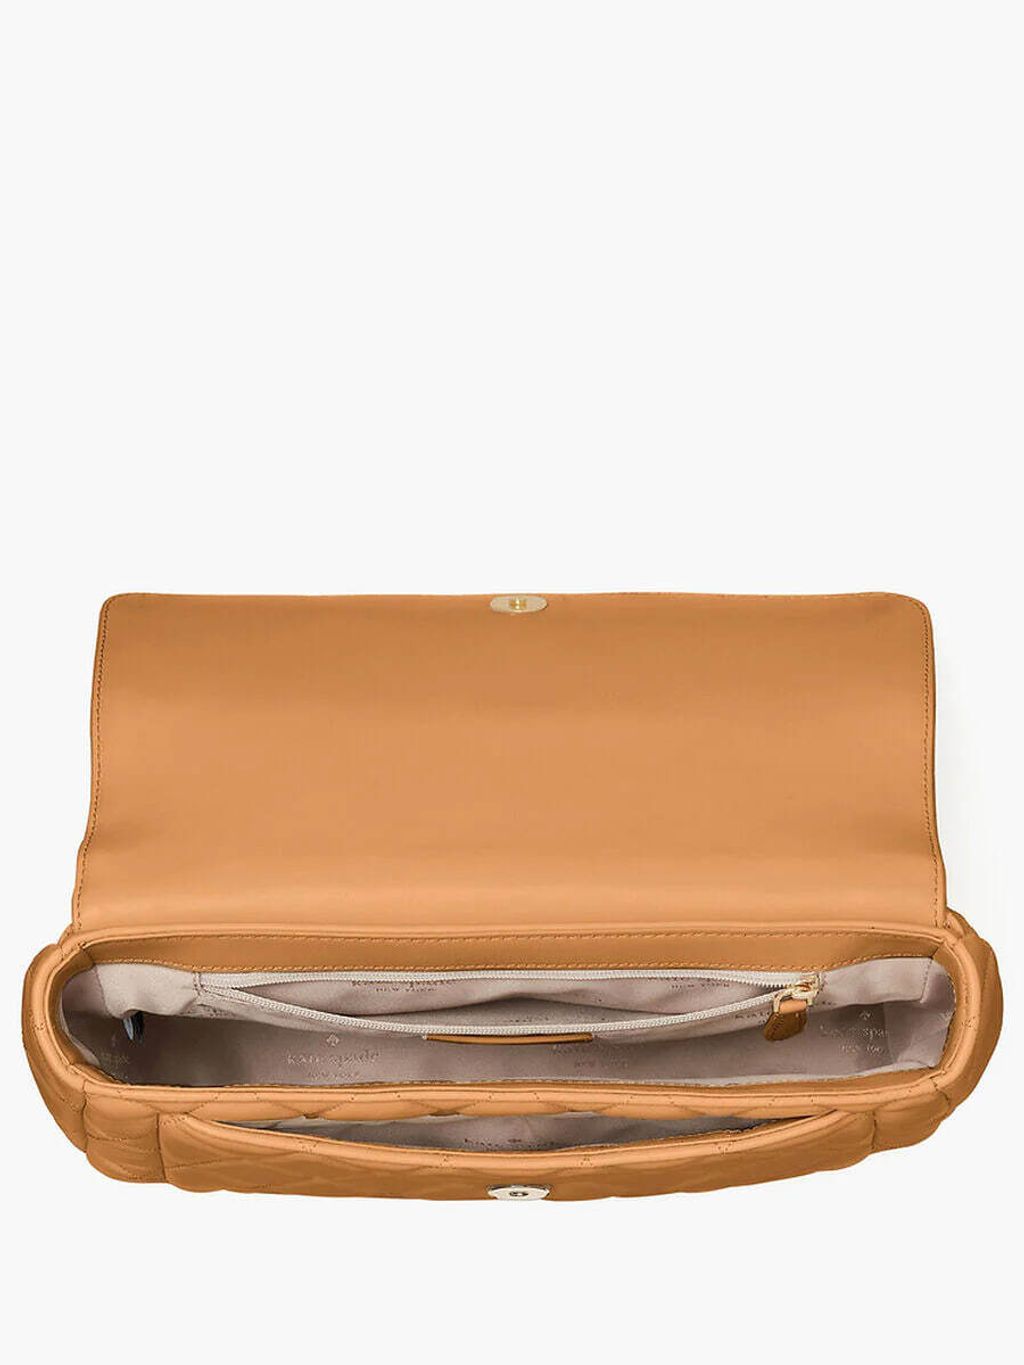 handbagbranded.com getlush outlet personalshopper usa Coach malaysia ready stock Kate Spade Carey Medium Flap Shoulder Bag in Tiramisu 3